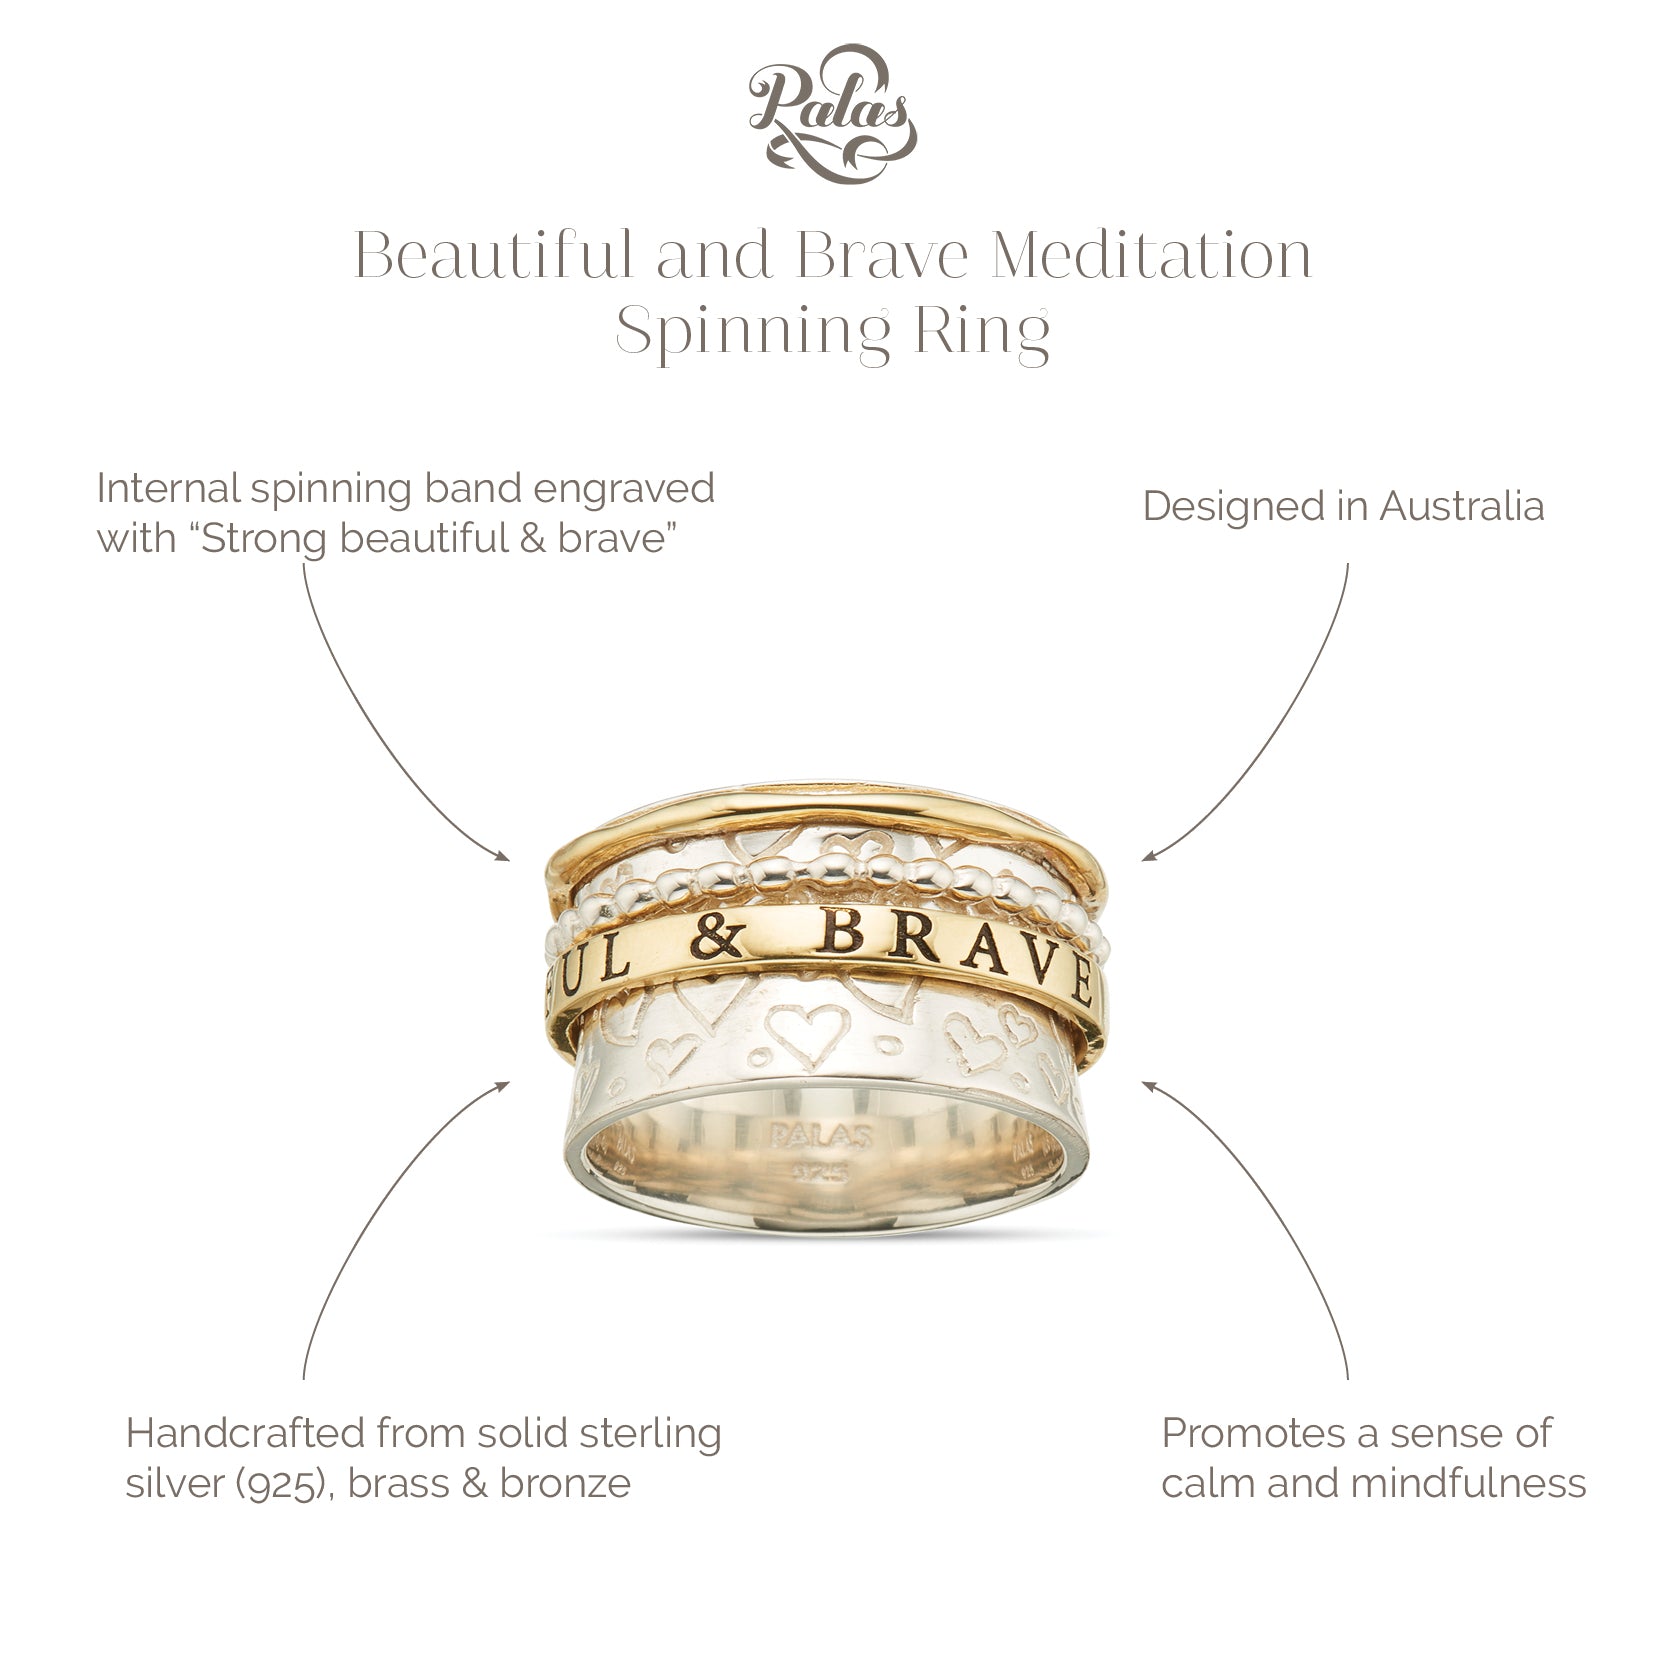 Beautiful & brave meditation spinning ring